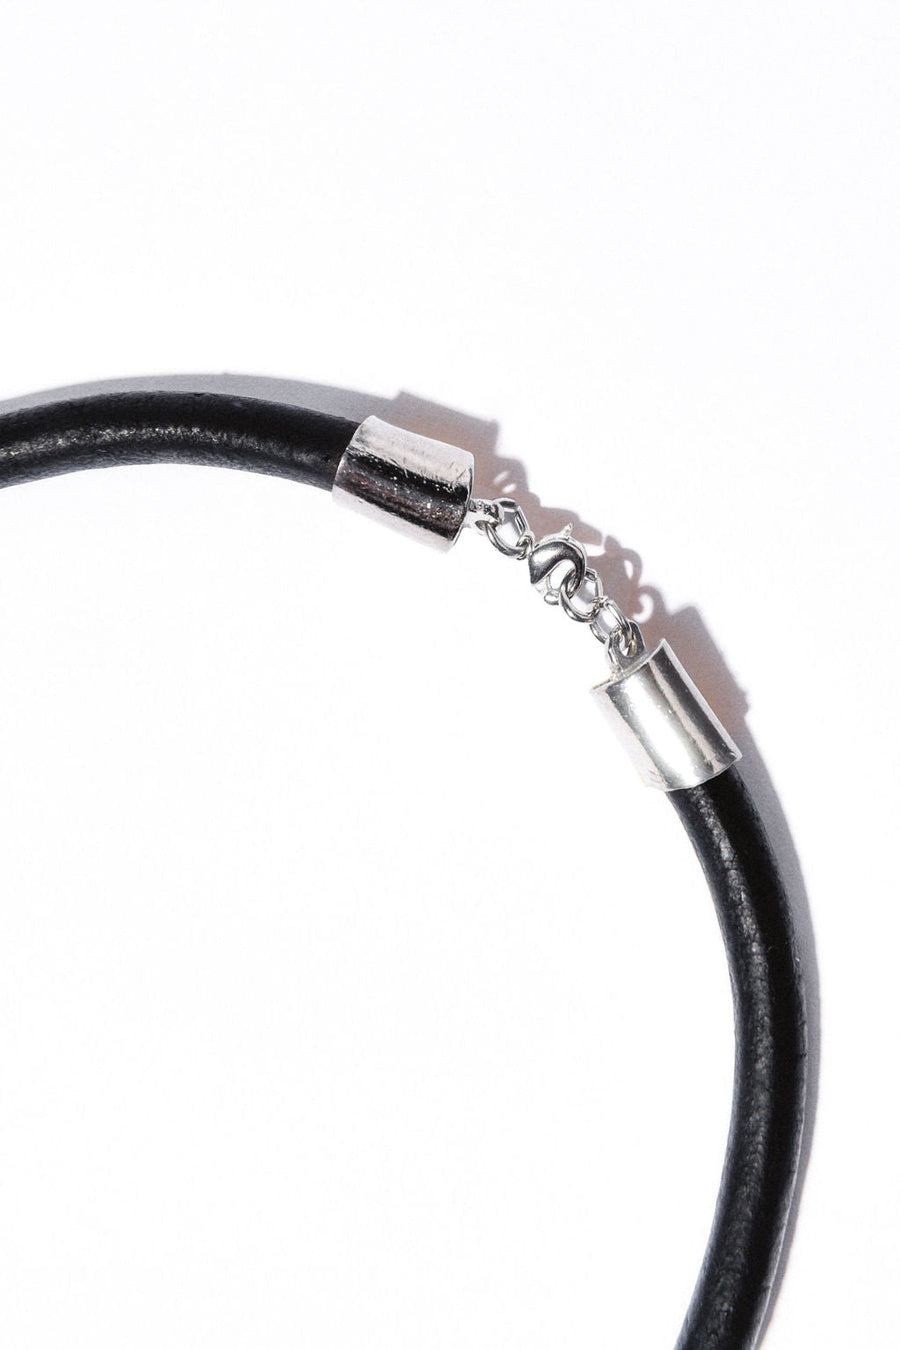 Angele Handcraft Jewelry Black Nautilus Leather Necklace